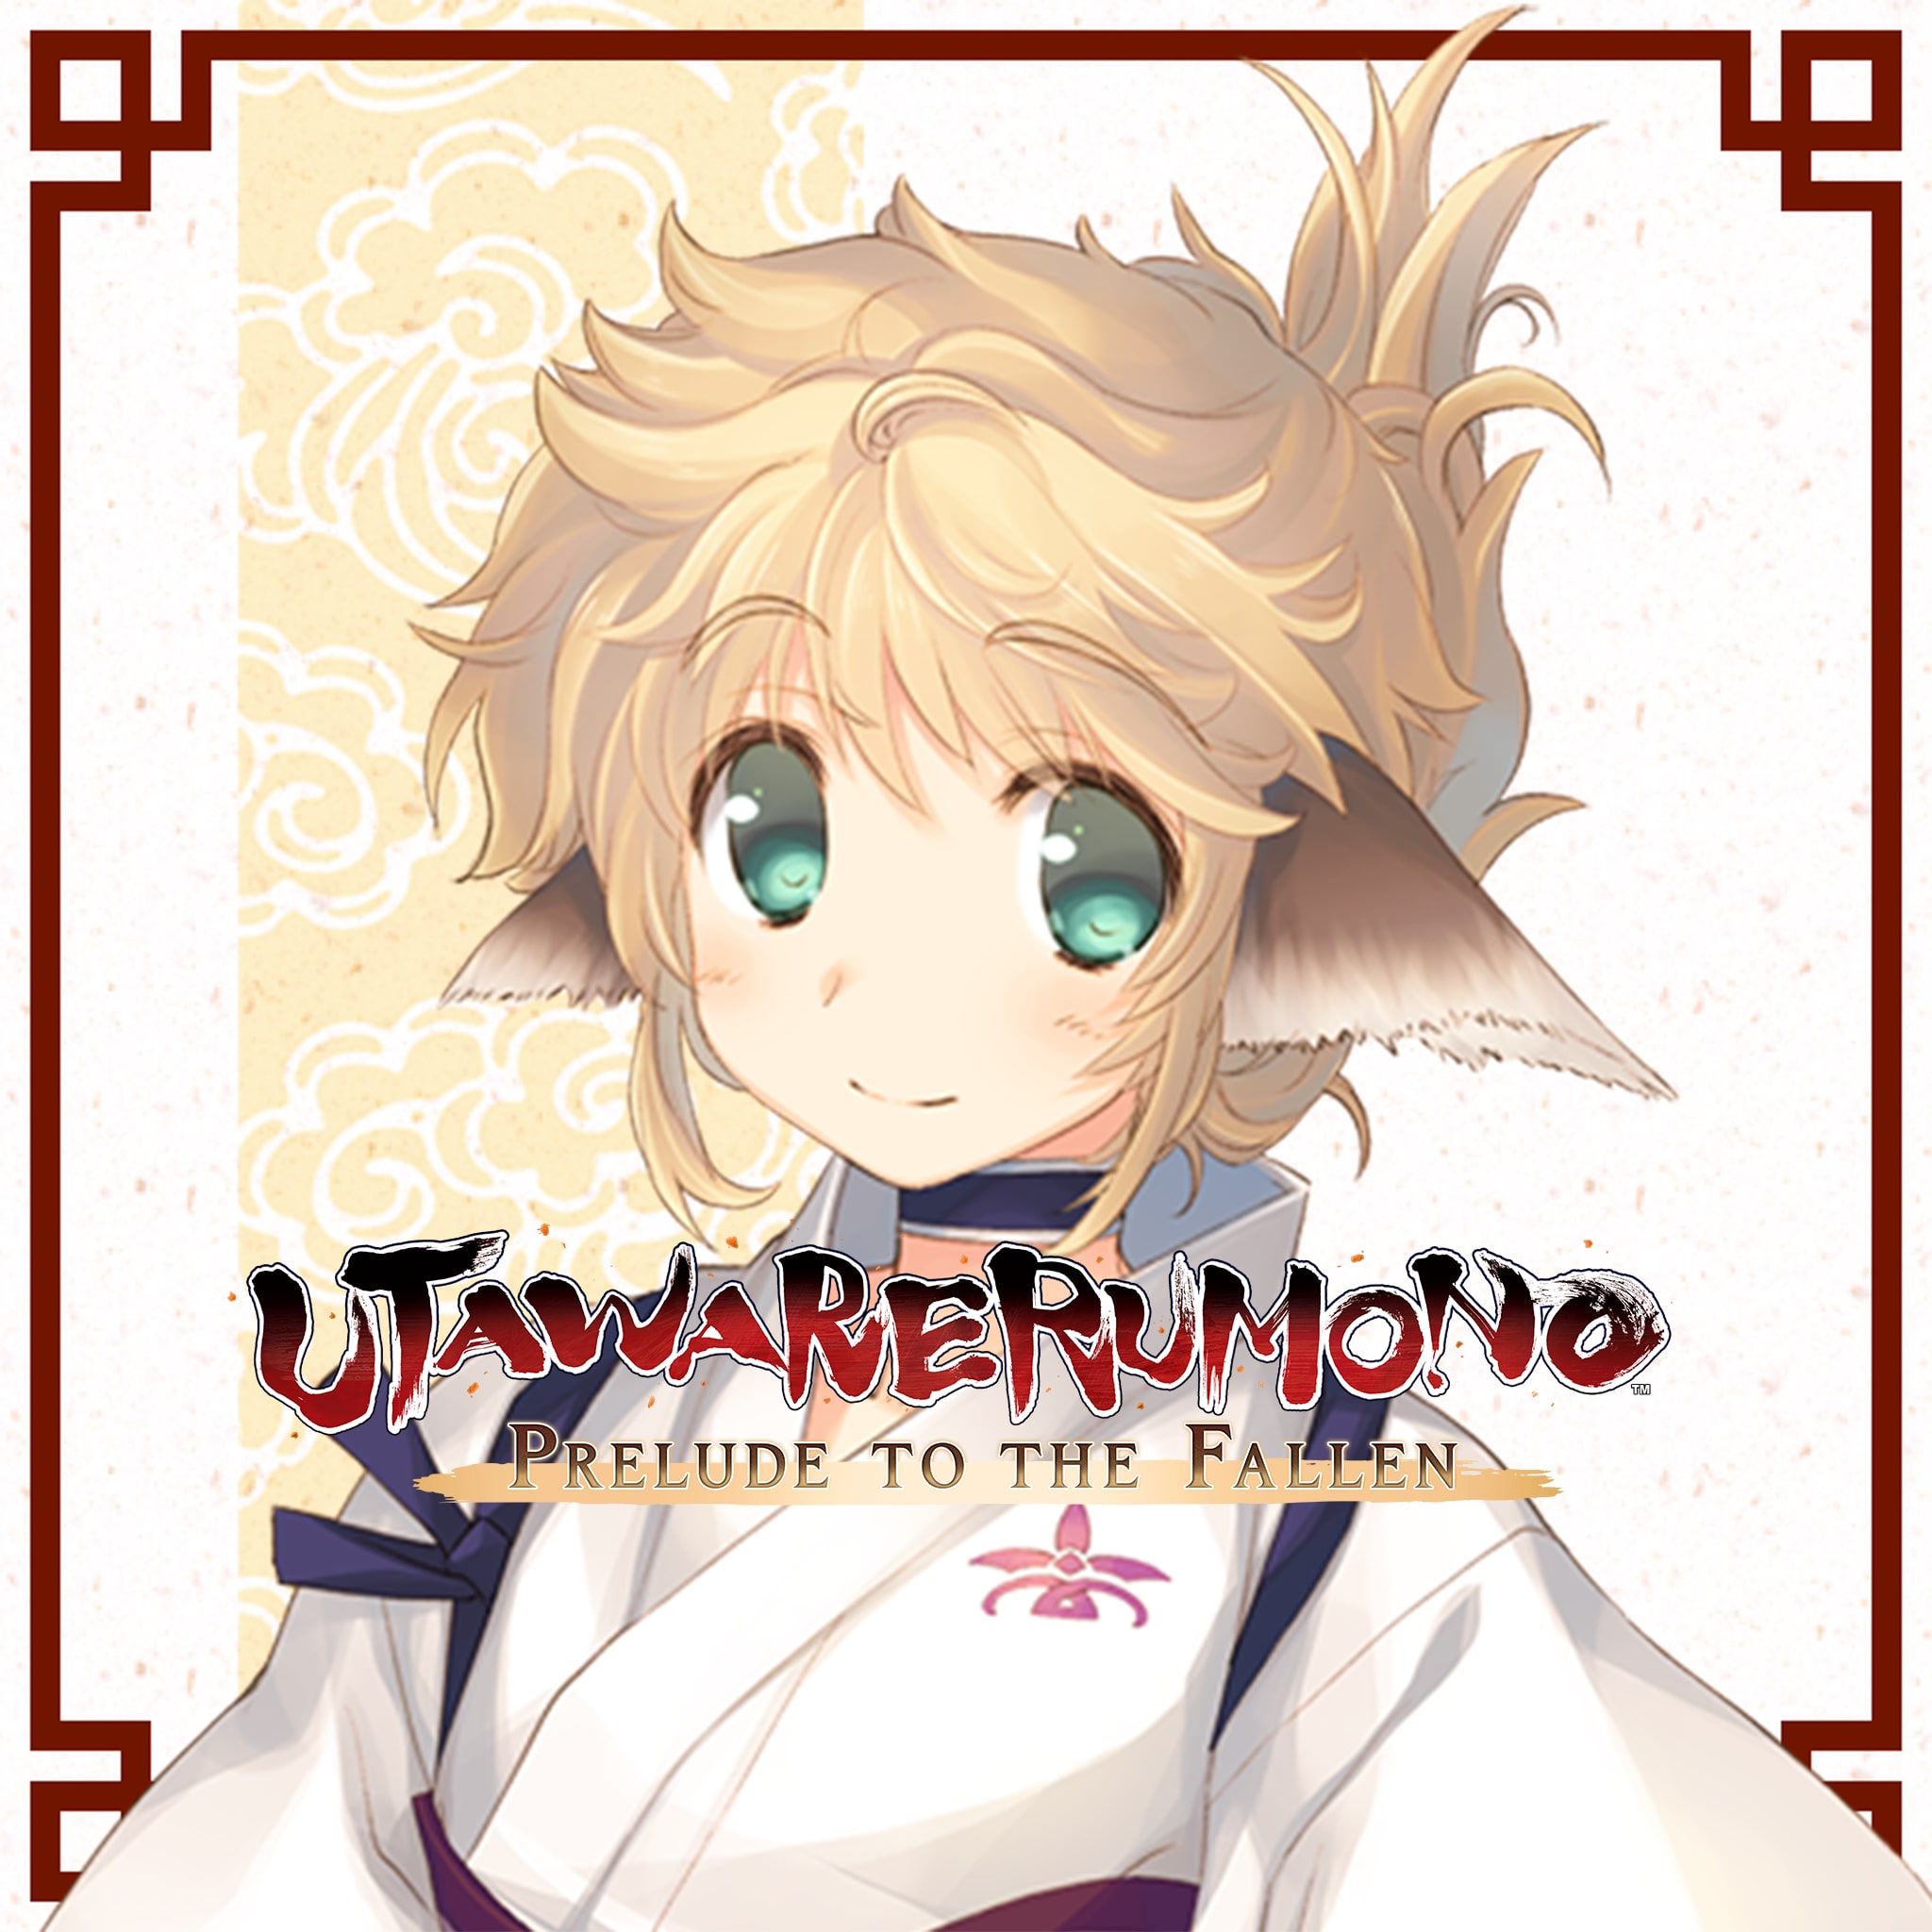 Utawarerumono: Prelude to the Fallen - DLC Character: Kiwru